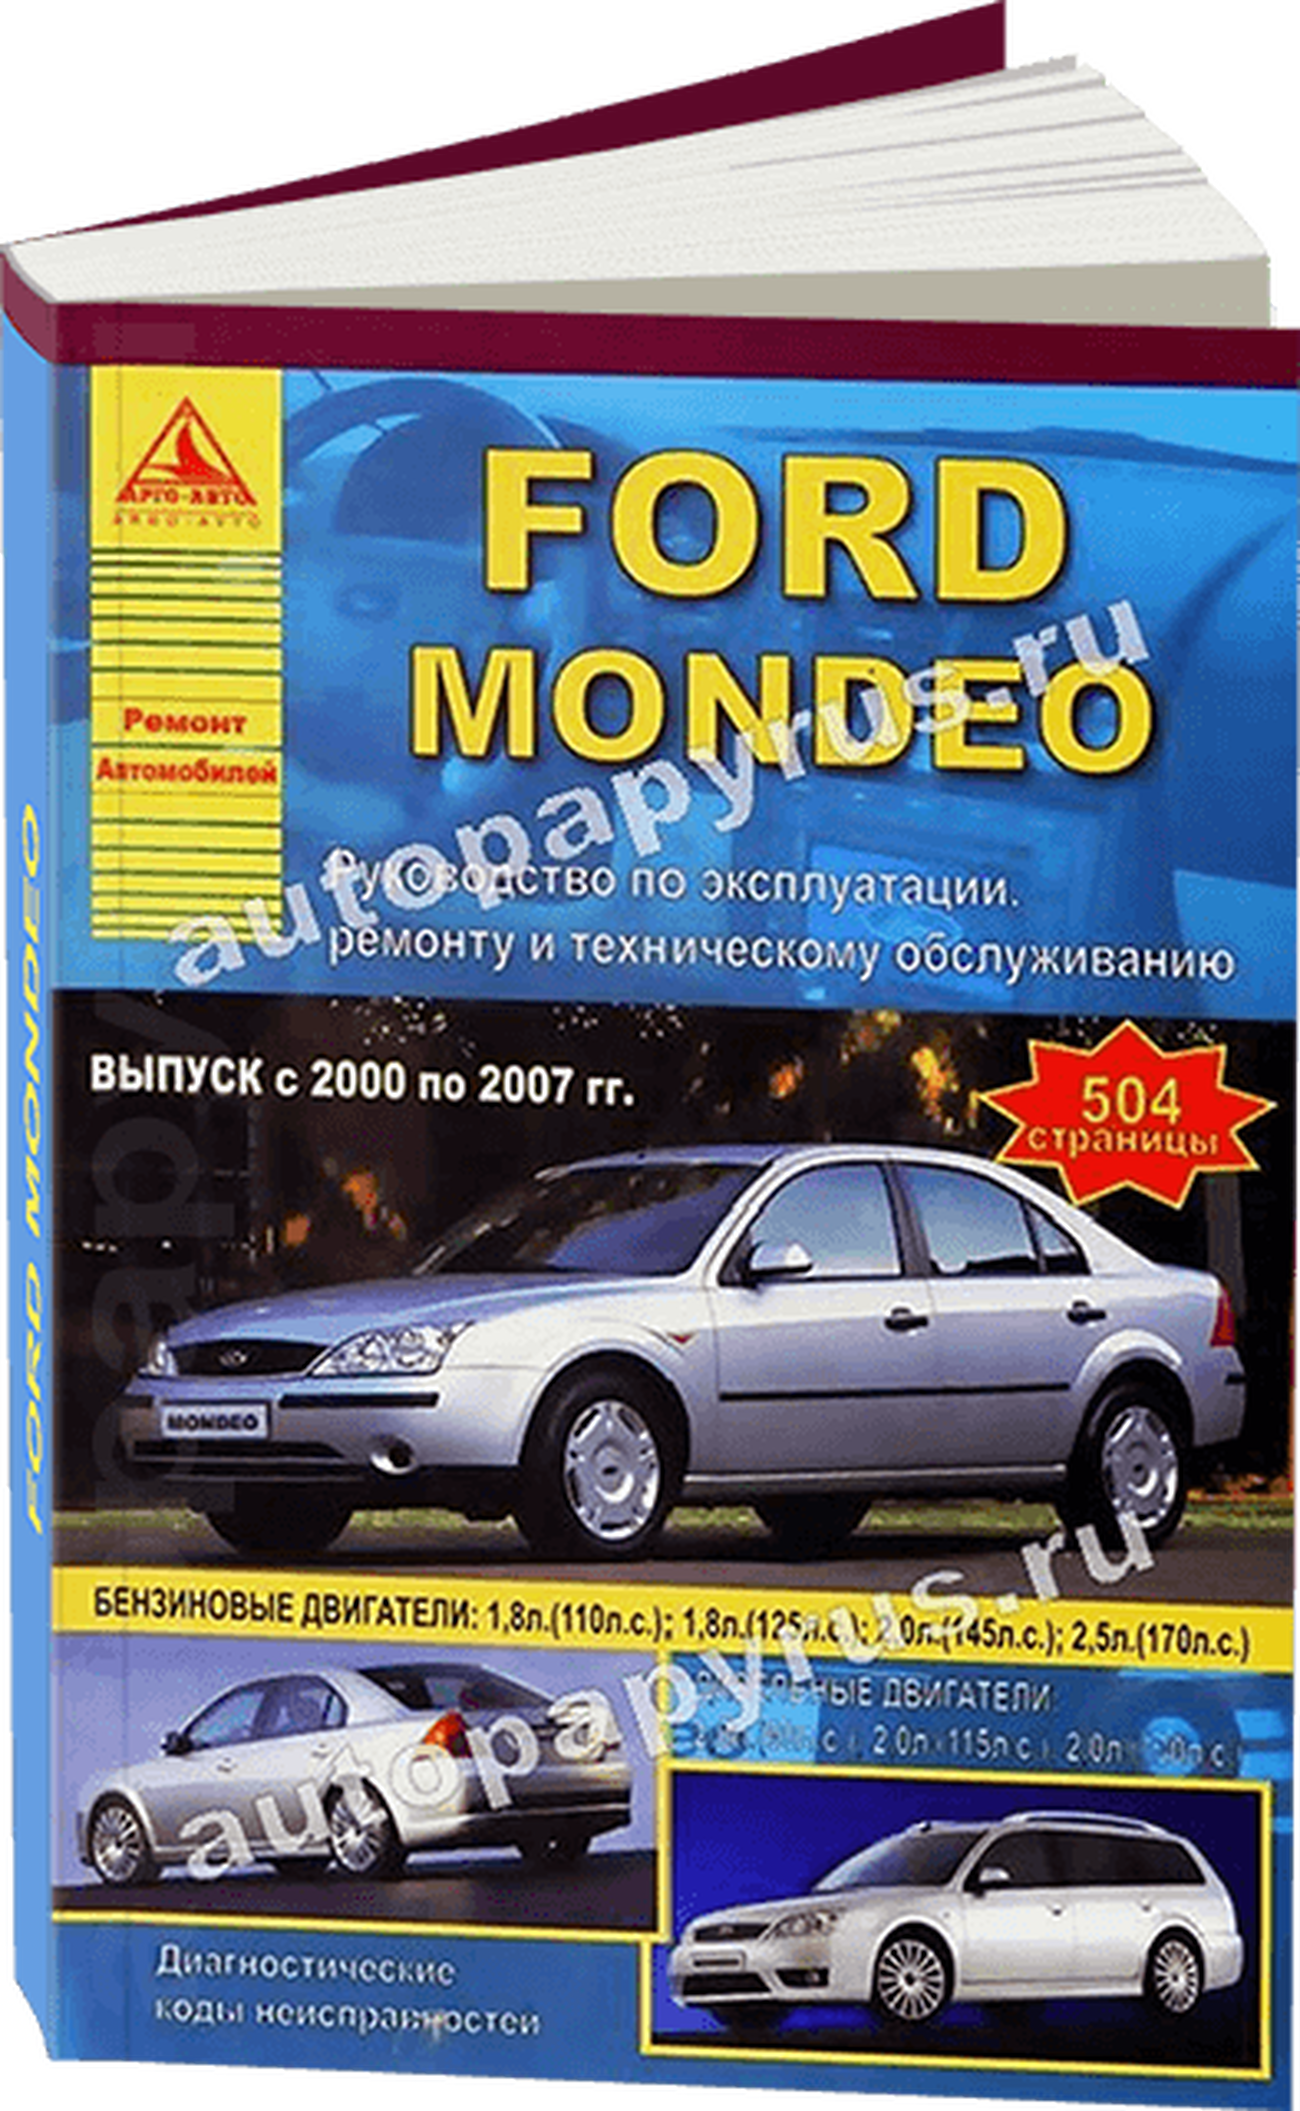 Книга: FORD MONDEO (б , д) 2000-2007 г.в., рем., экспл., то | Арго-Авто